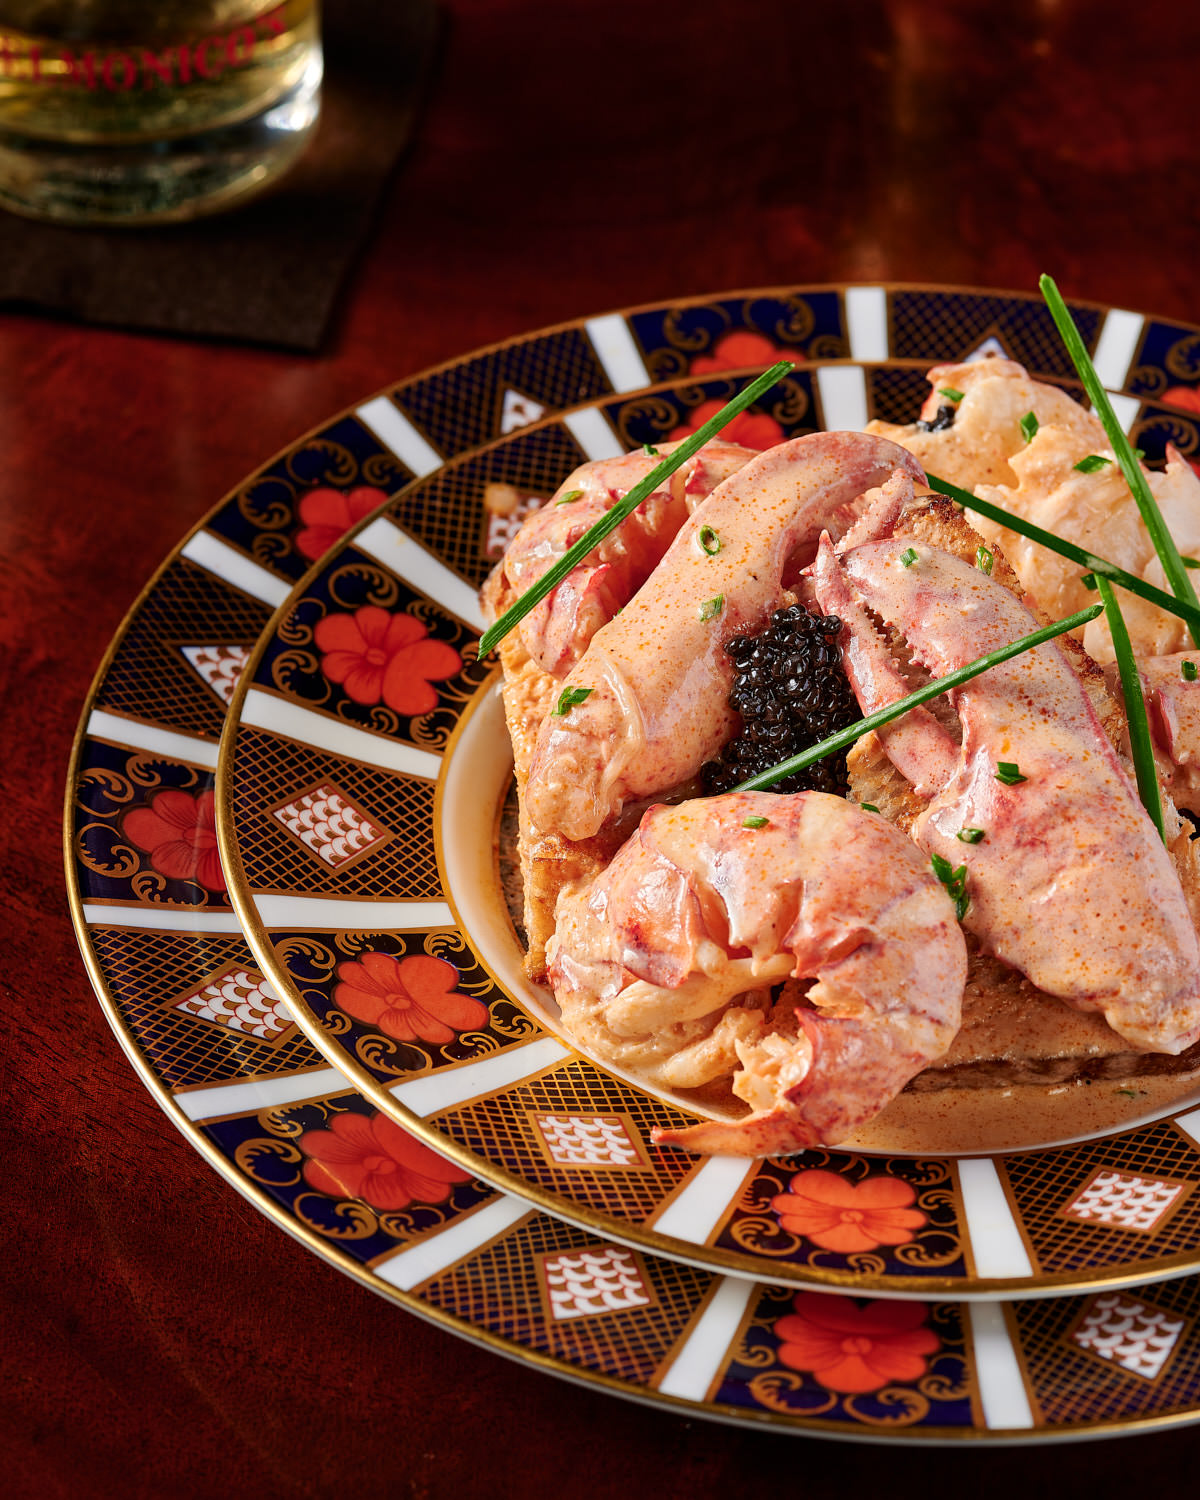 Editorial Cookbook Food Photography of Lobster Newburg